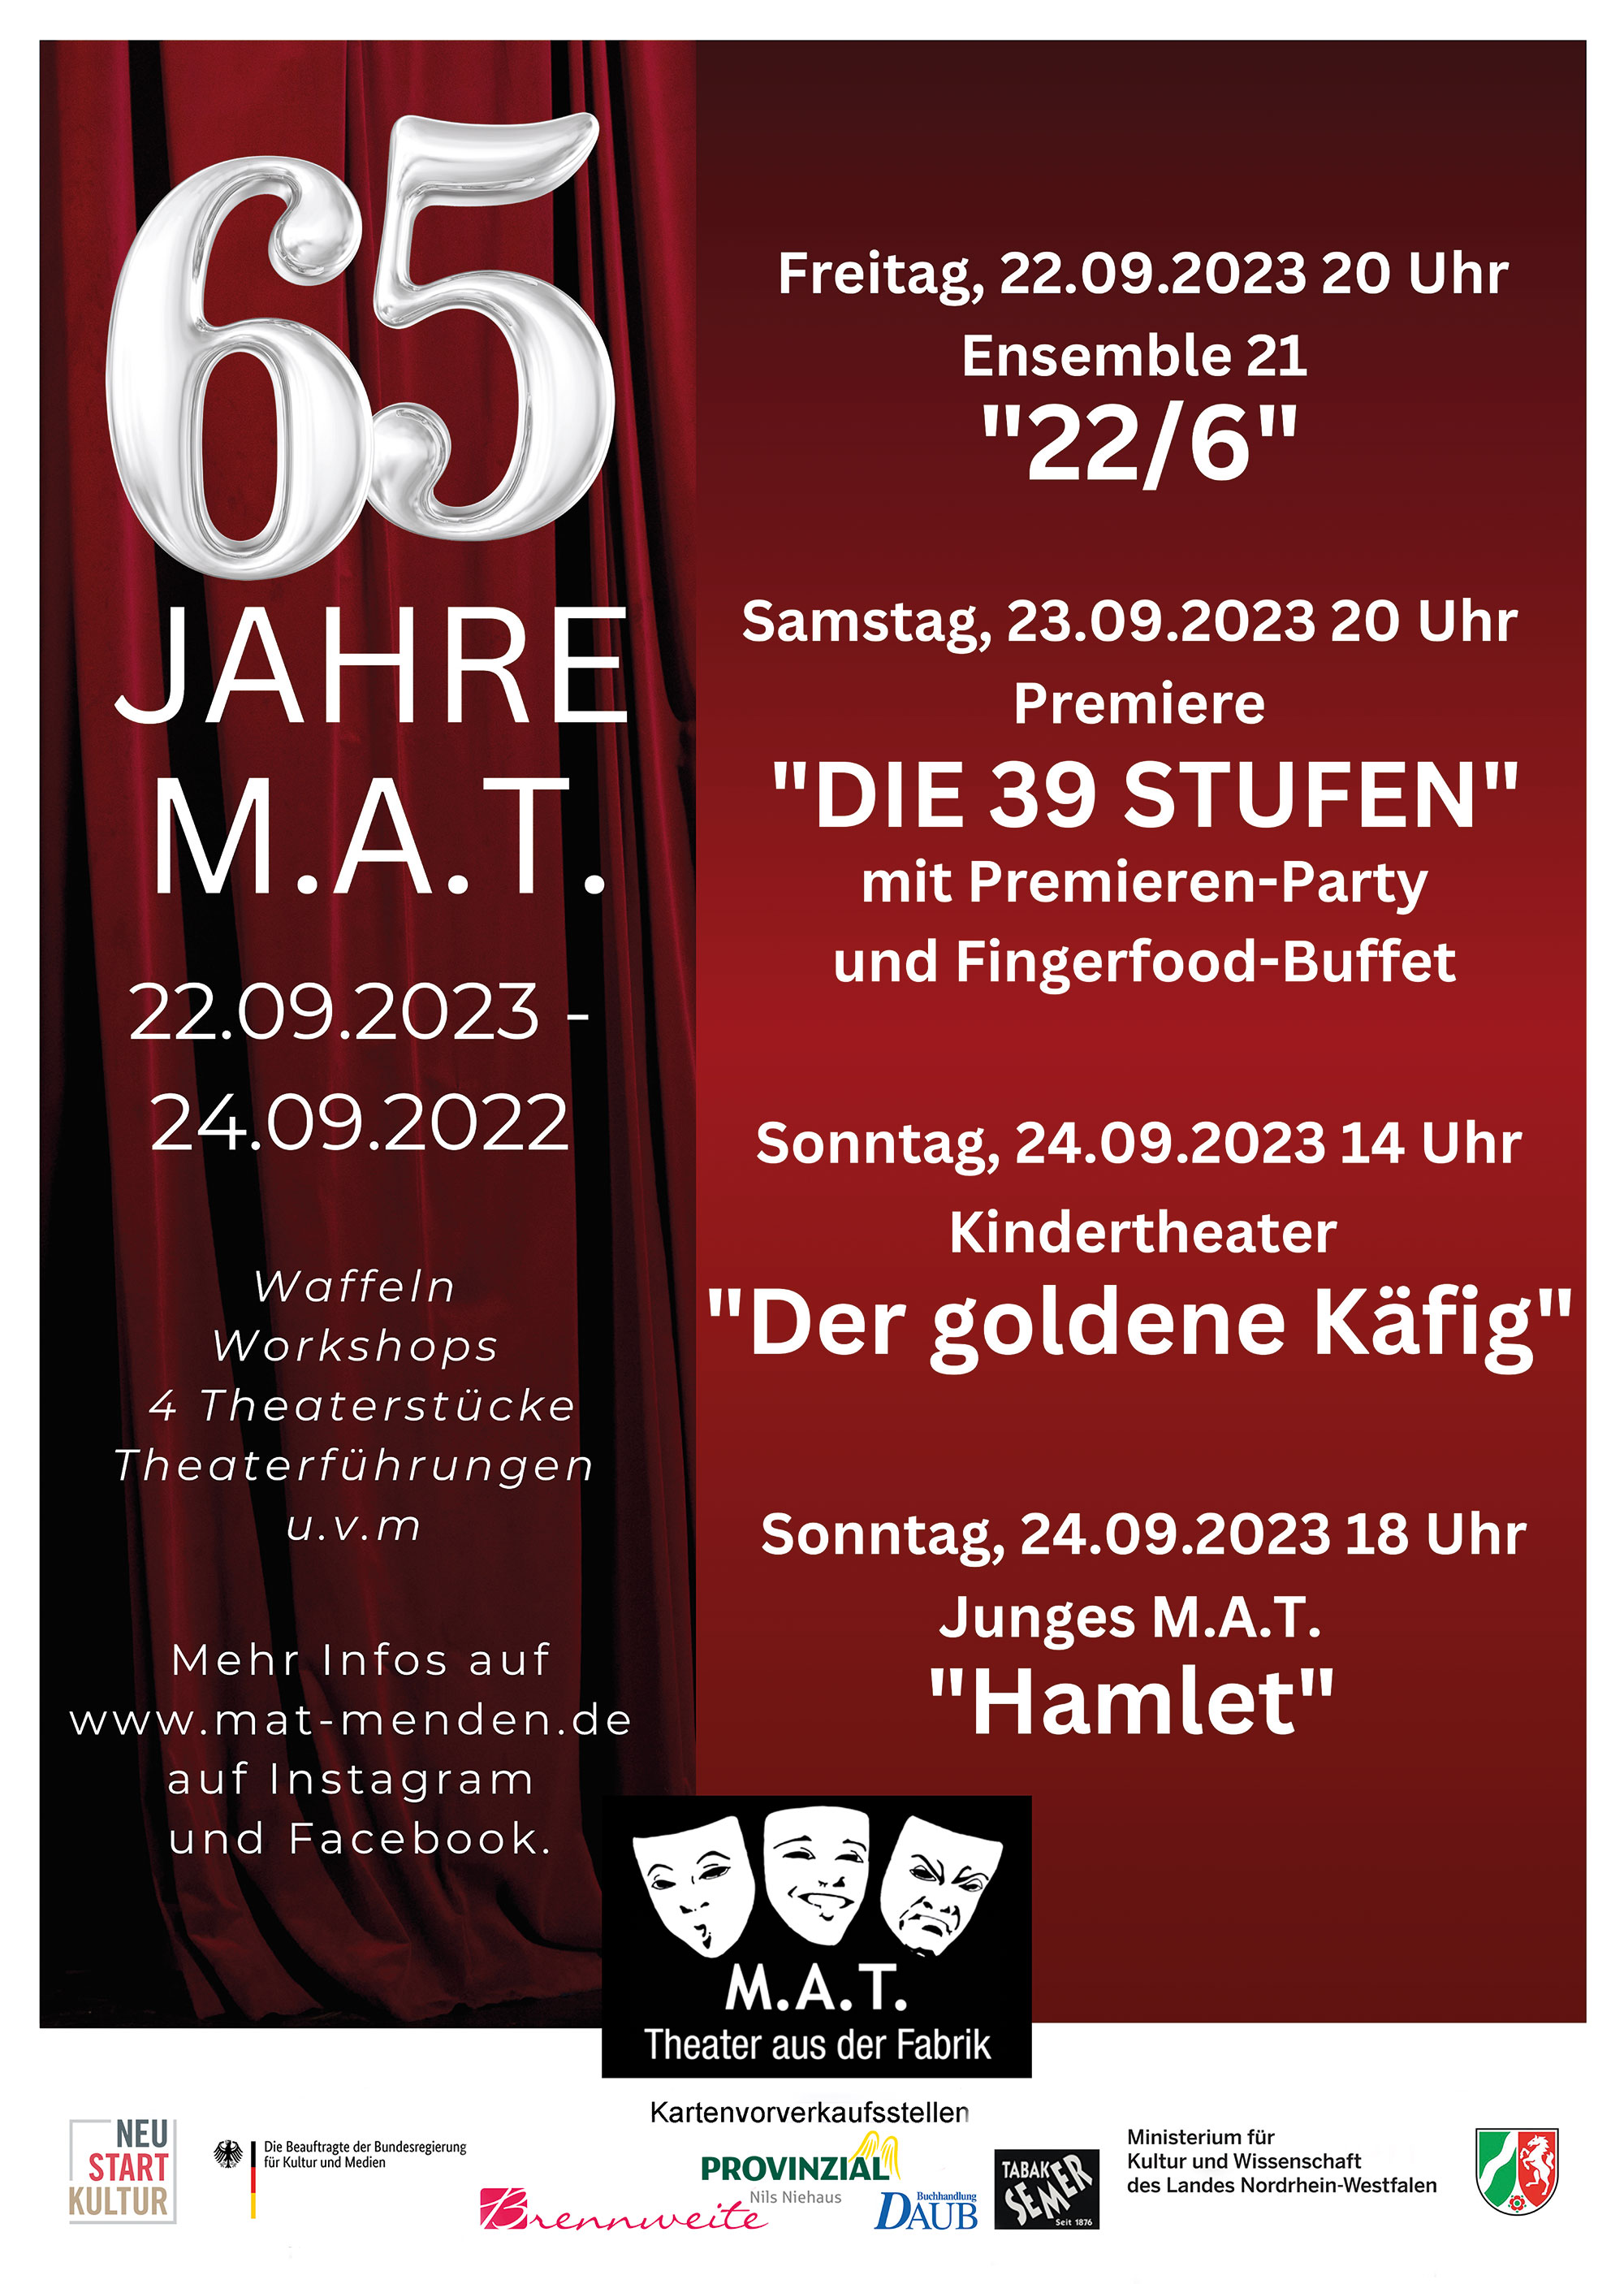 Der goldene Käfig - Kindertheater M.A.T.